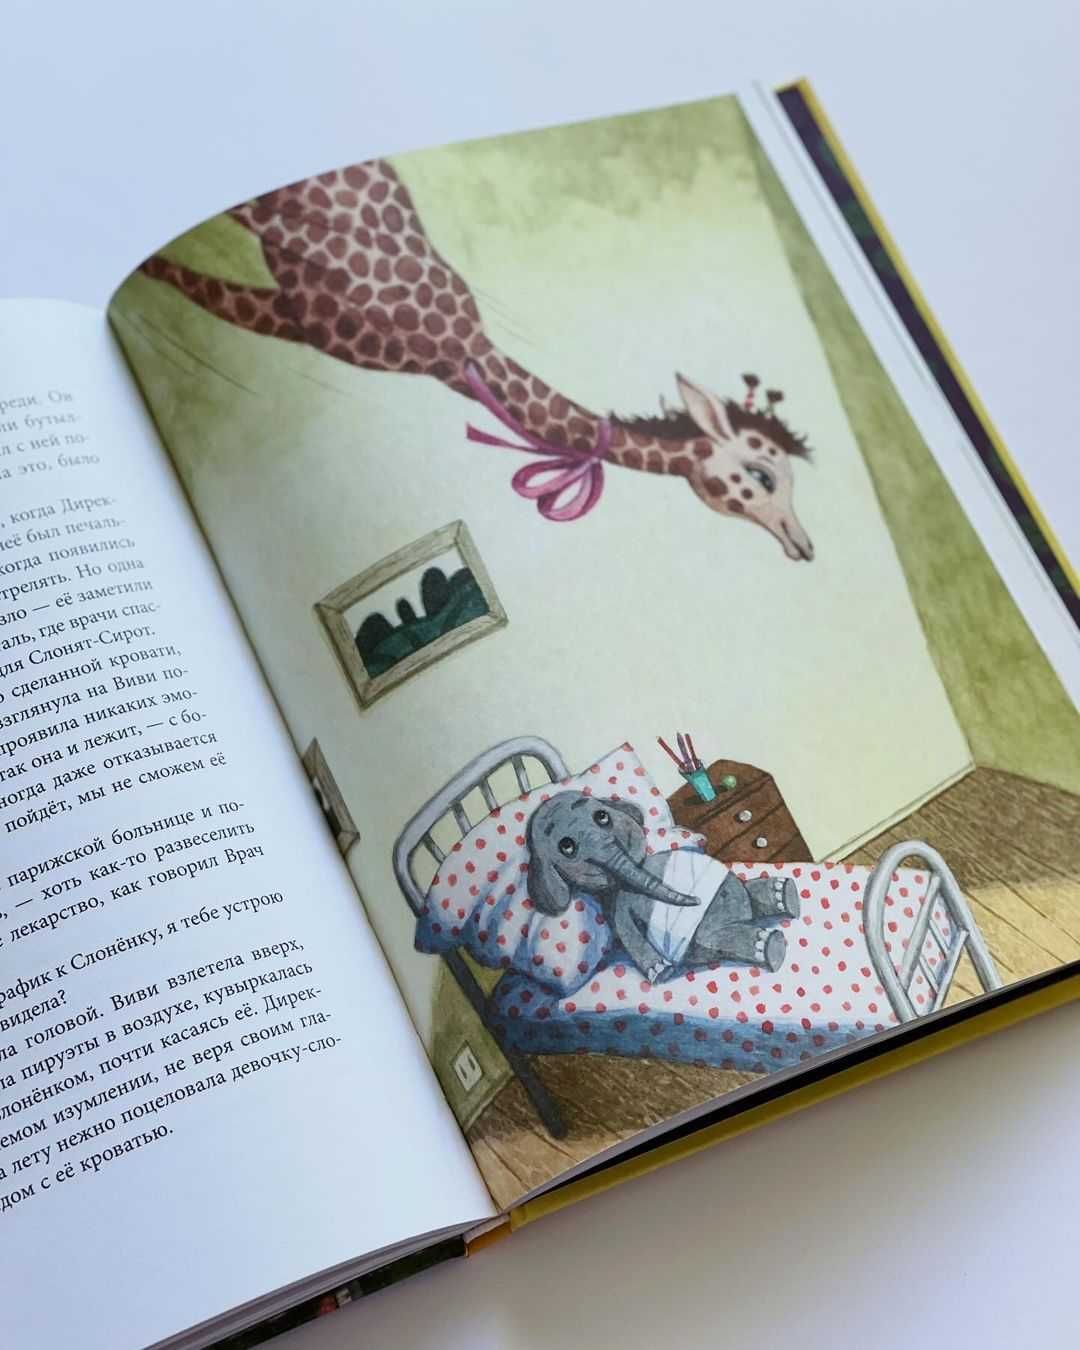 Книга на руски "Невероятные приключения Жирафика Виви"